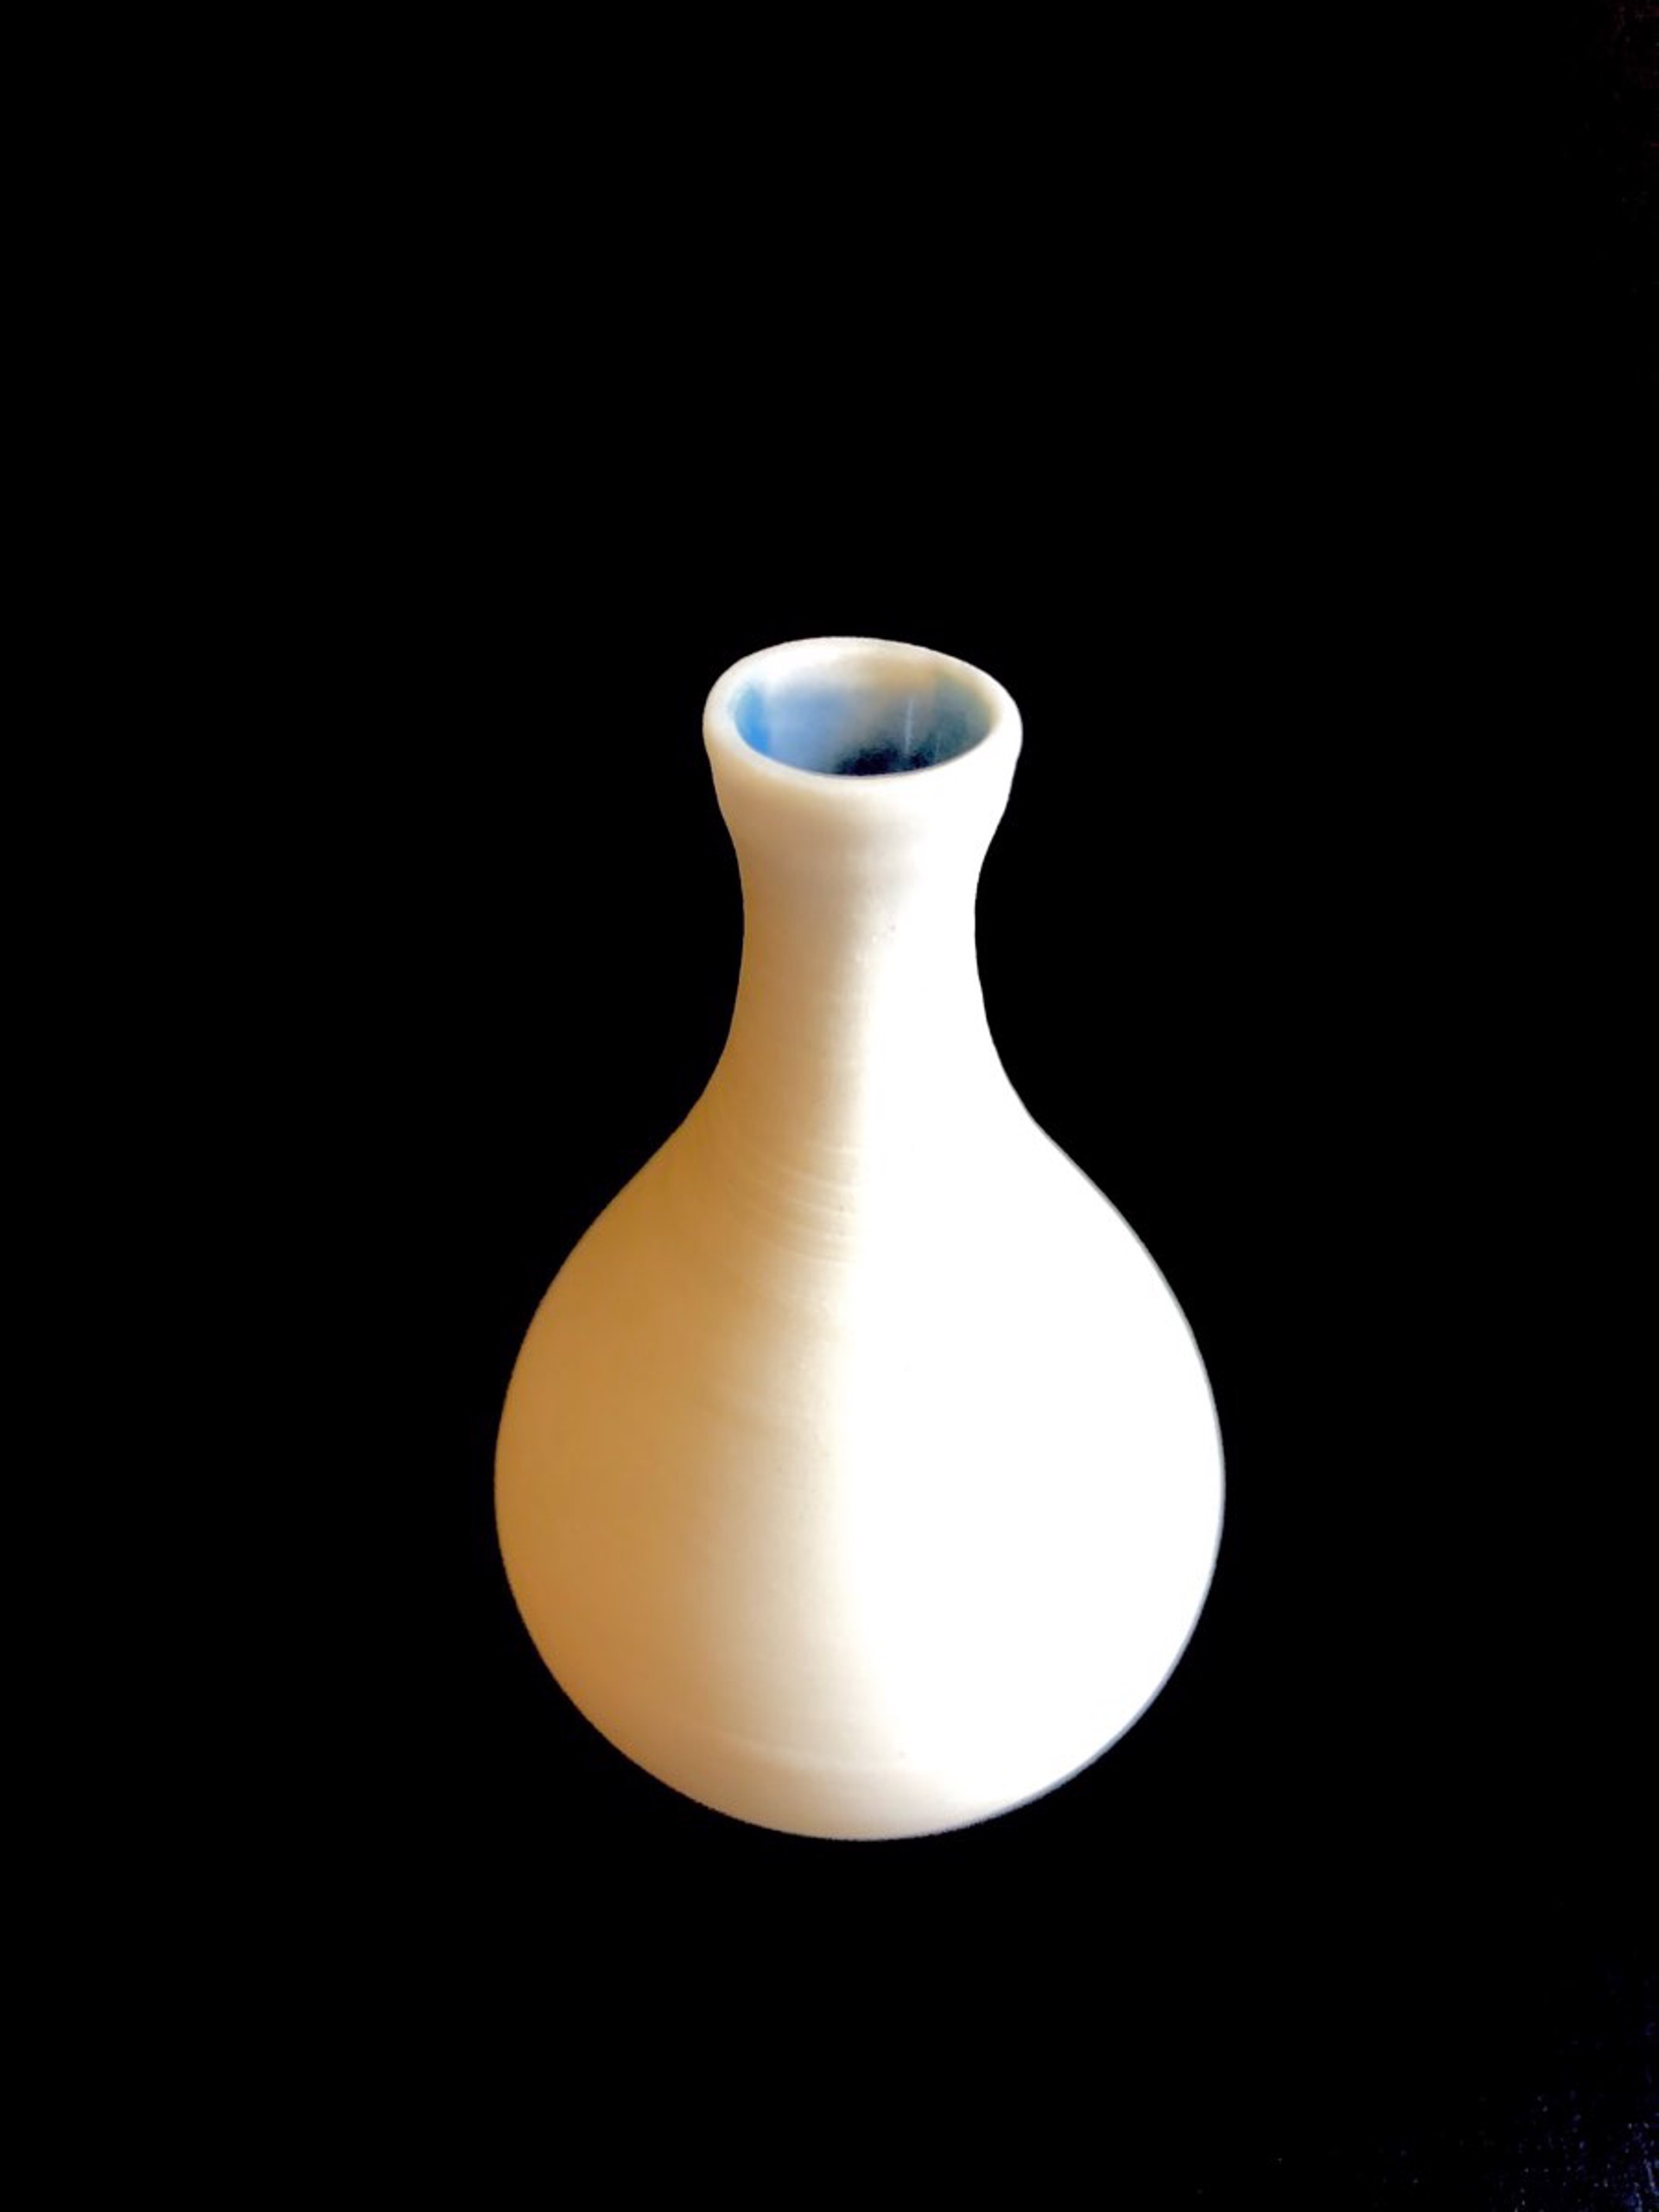 Mini Pistil Porcelain Vessel by Mary Lynn Portera